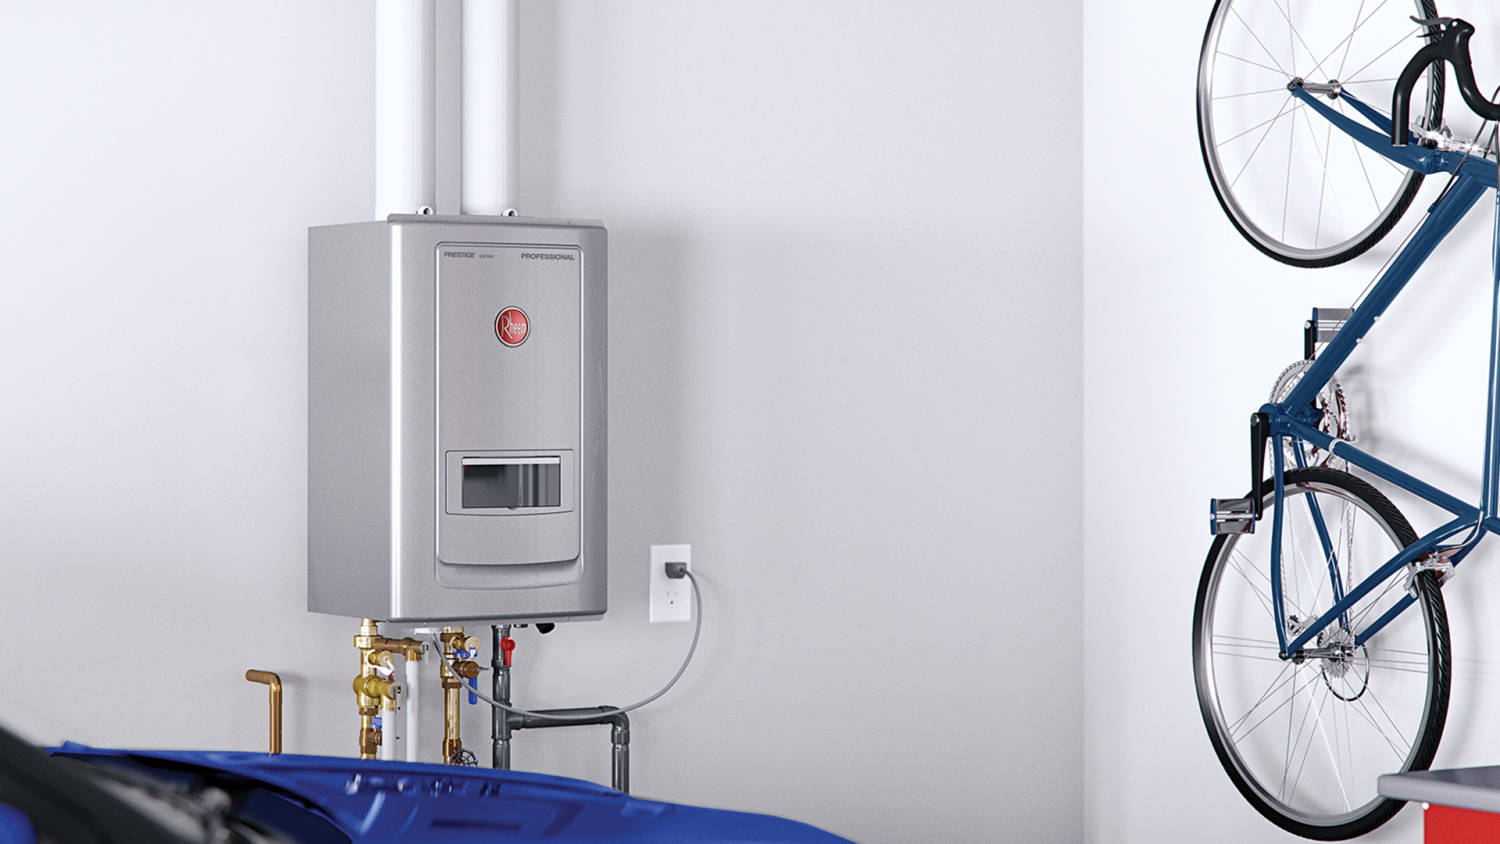 Top Benefits of Installing an On-Demand Water Heater